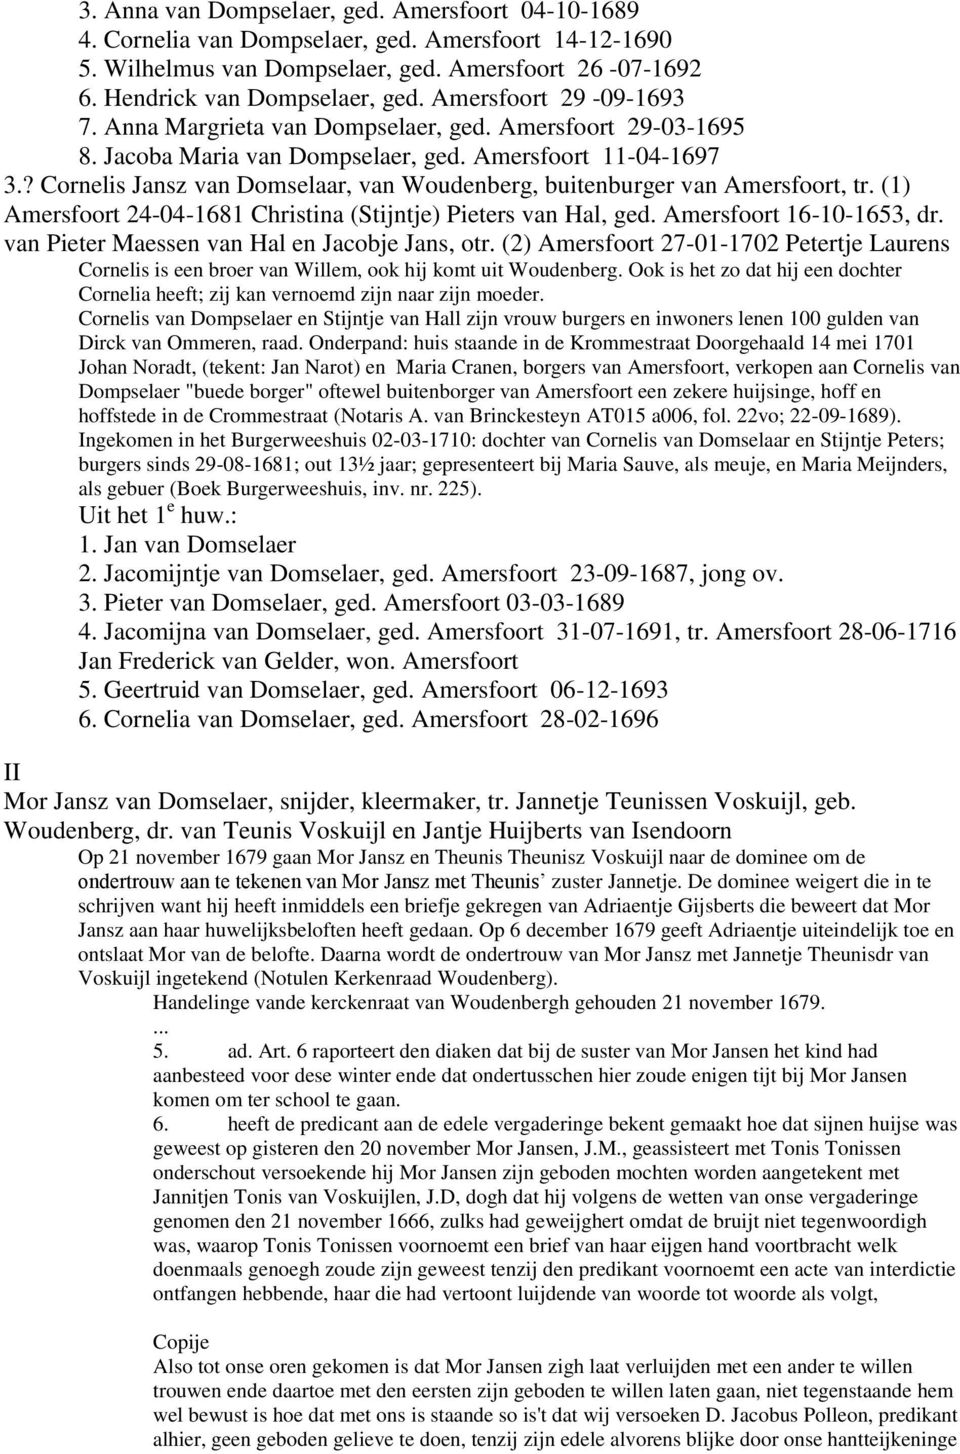 ? Cornelis Jansz van Domselaar, van Woudenberg, buitenburger van Amersfoort, tr. (1) Amersfoort 24-04-1681 Christina (Stijntje) Pieters van Hal, ged. Amersfoort 16-10-1653, dr.